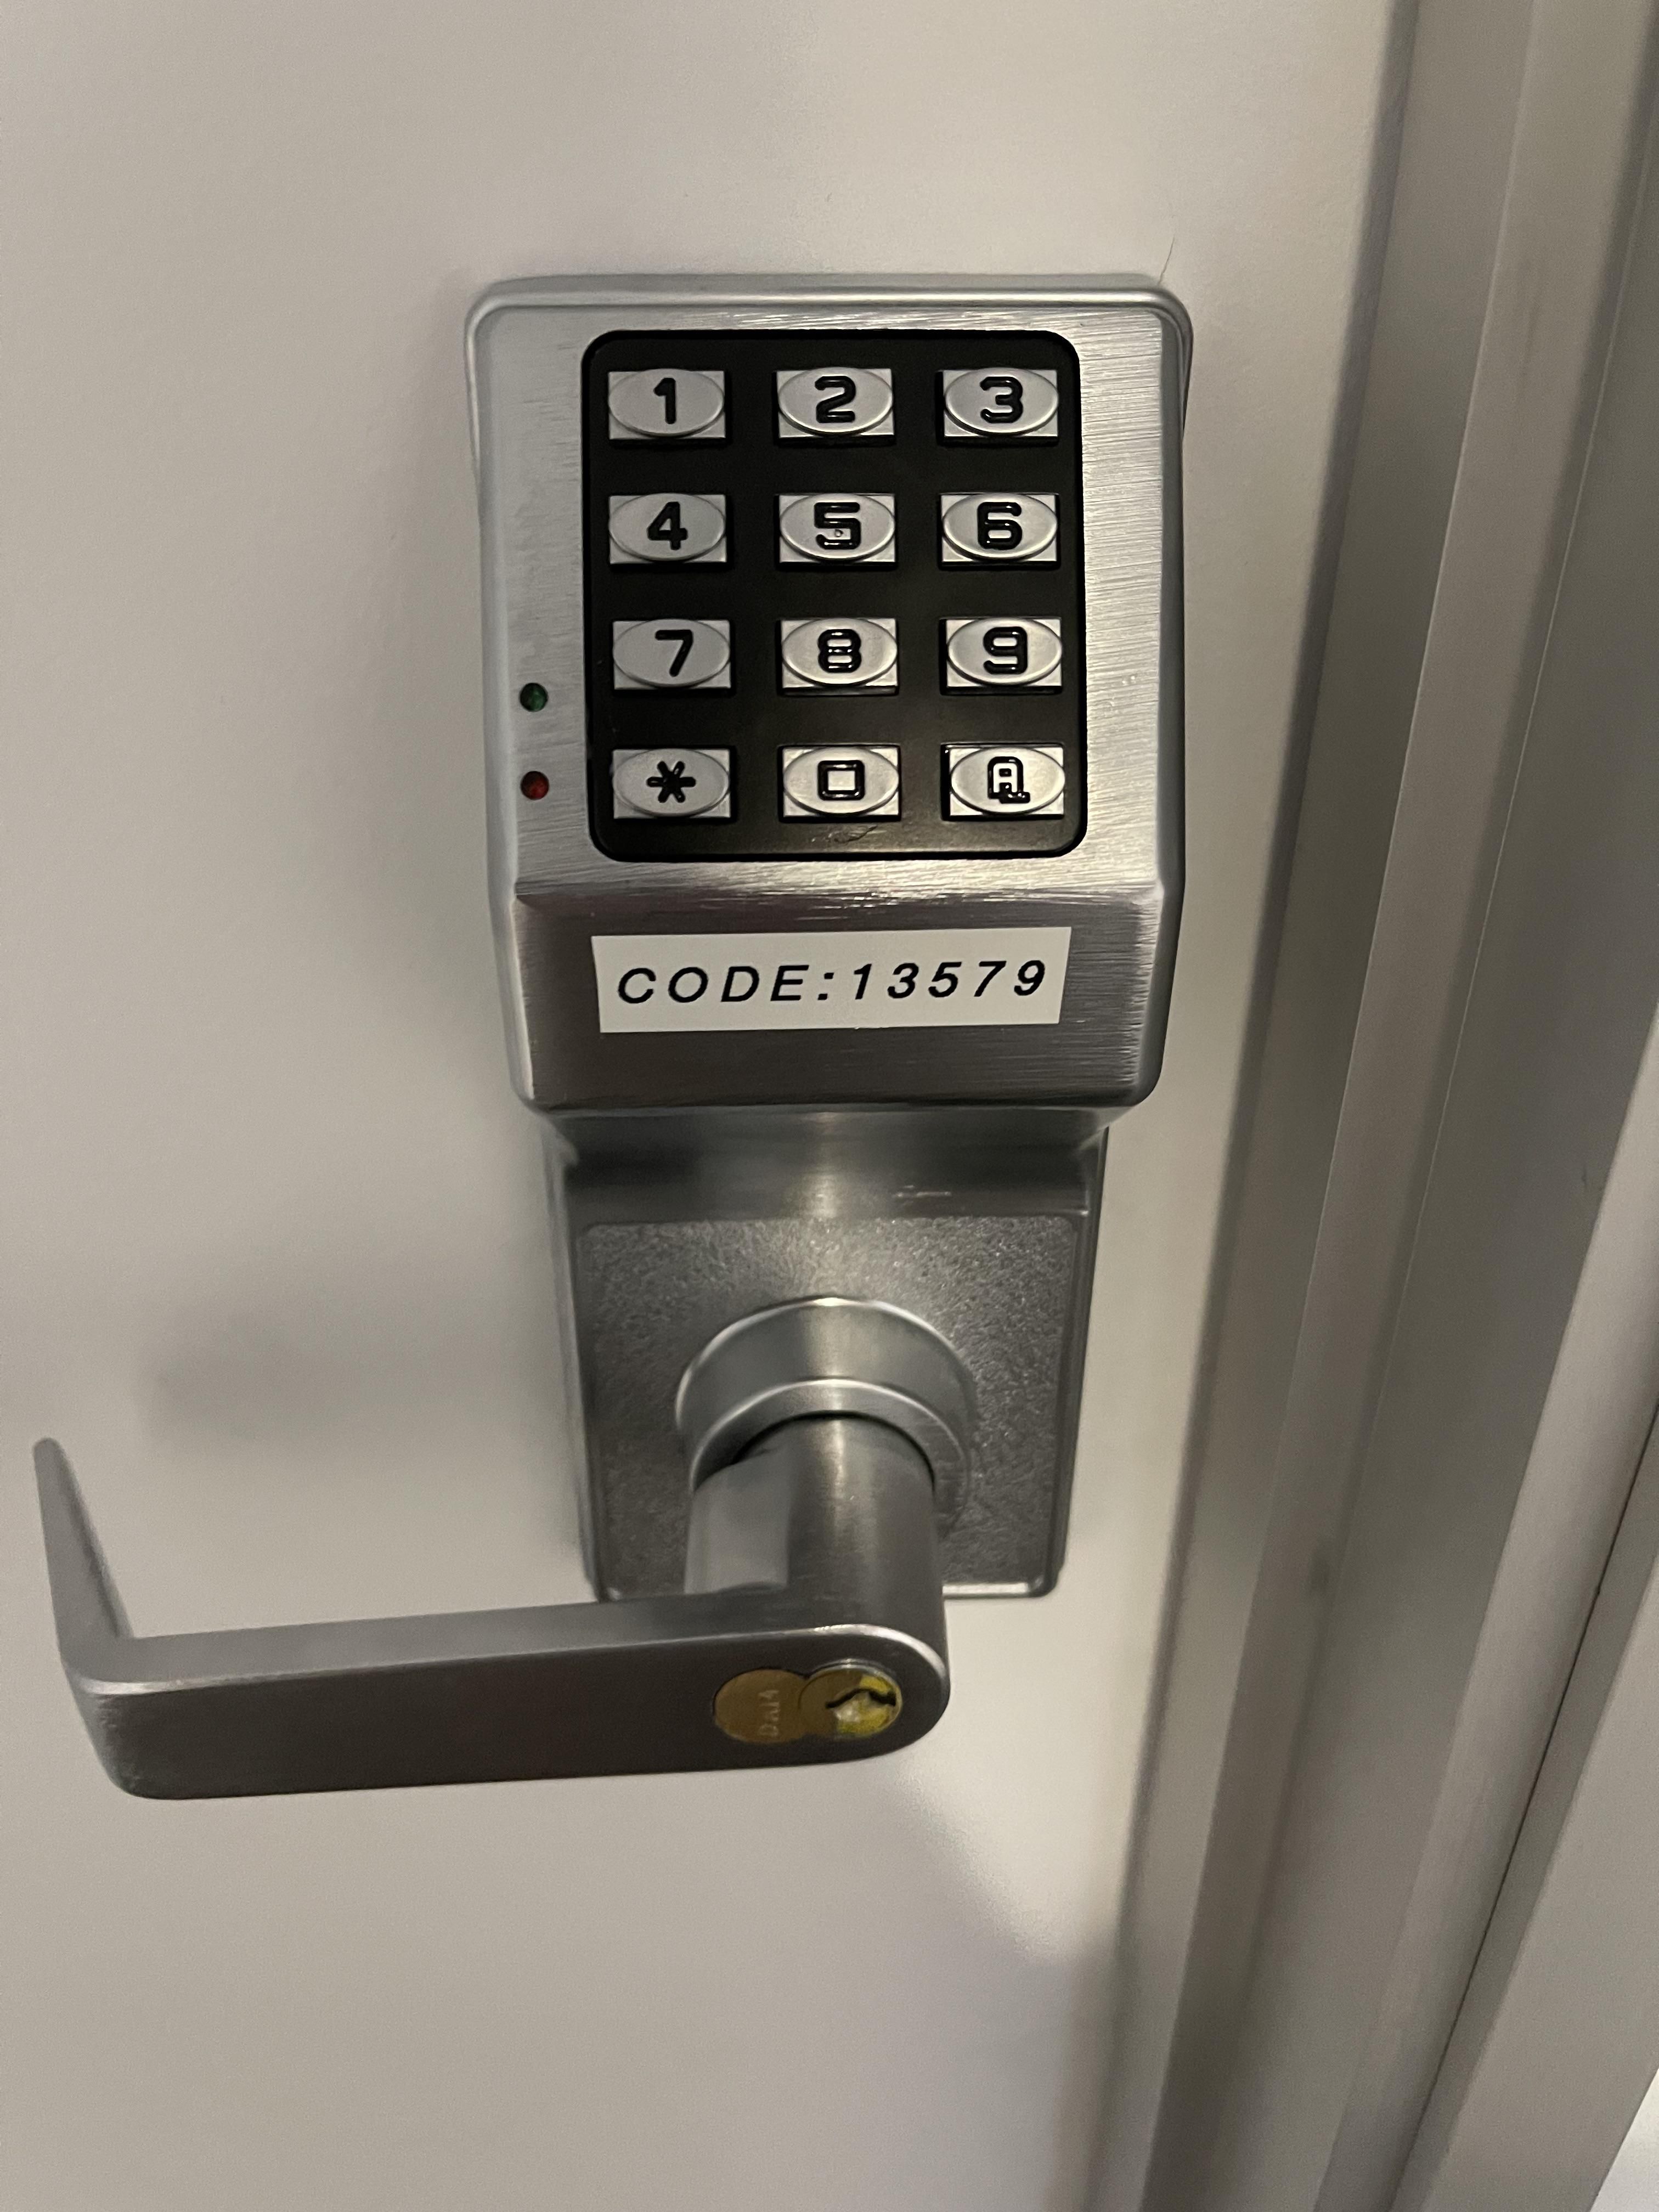 How not to secure a door…